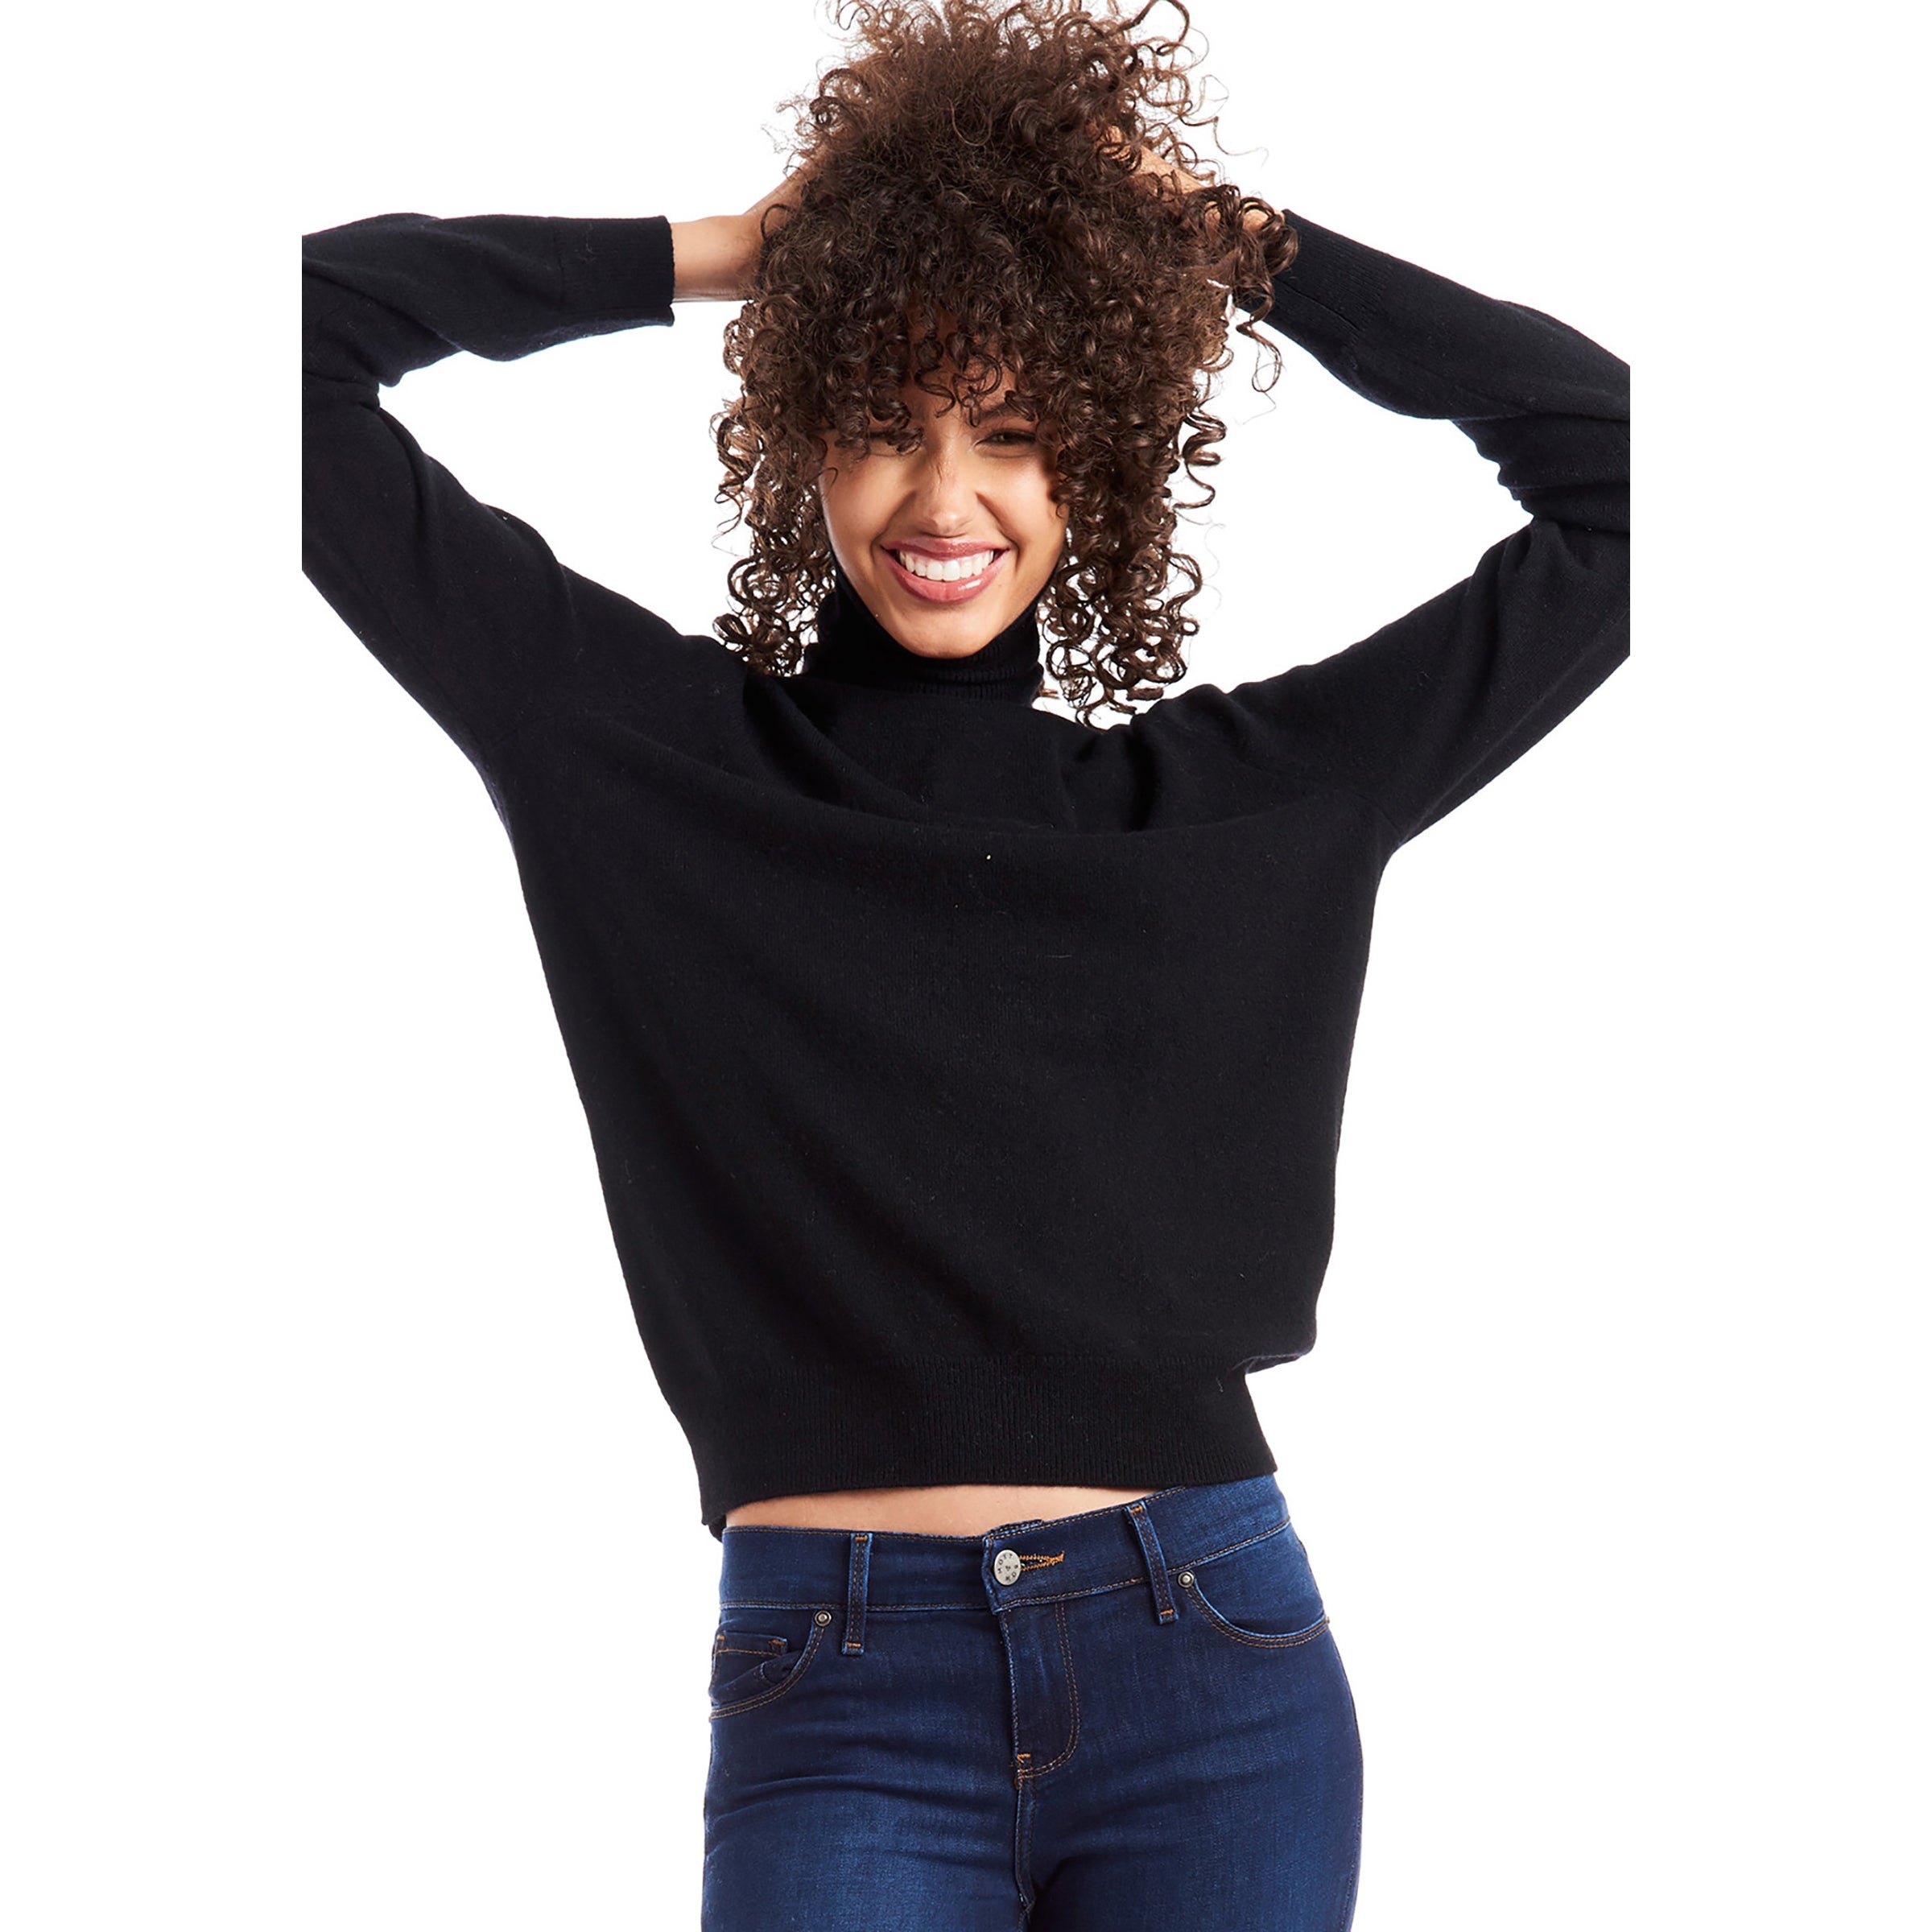 Women wearing Noir The Cashmere Turtleneck Willow Sweater